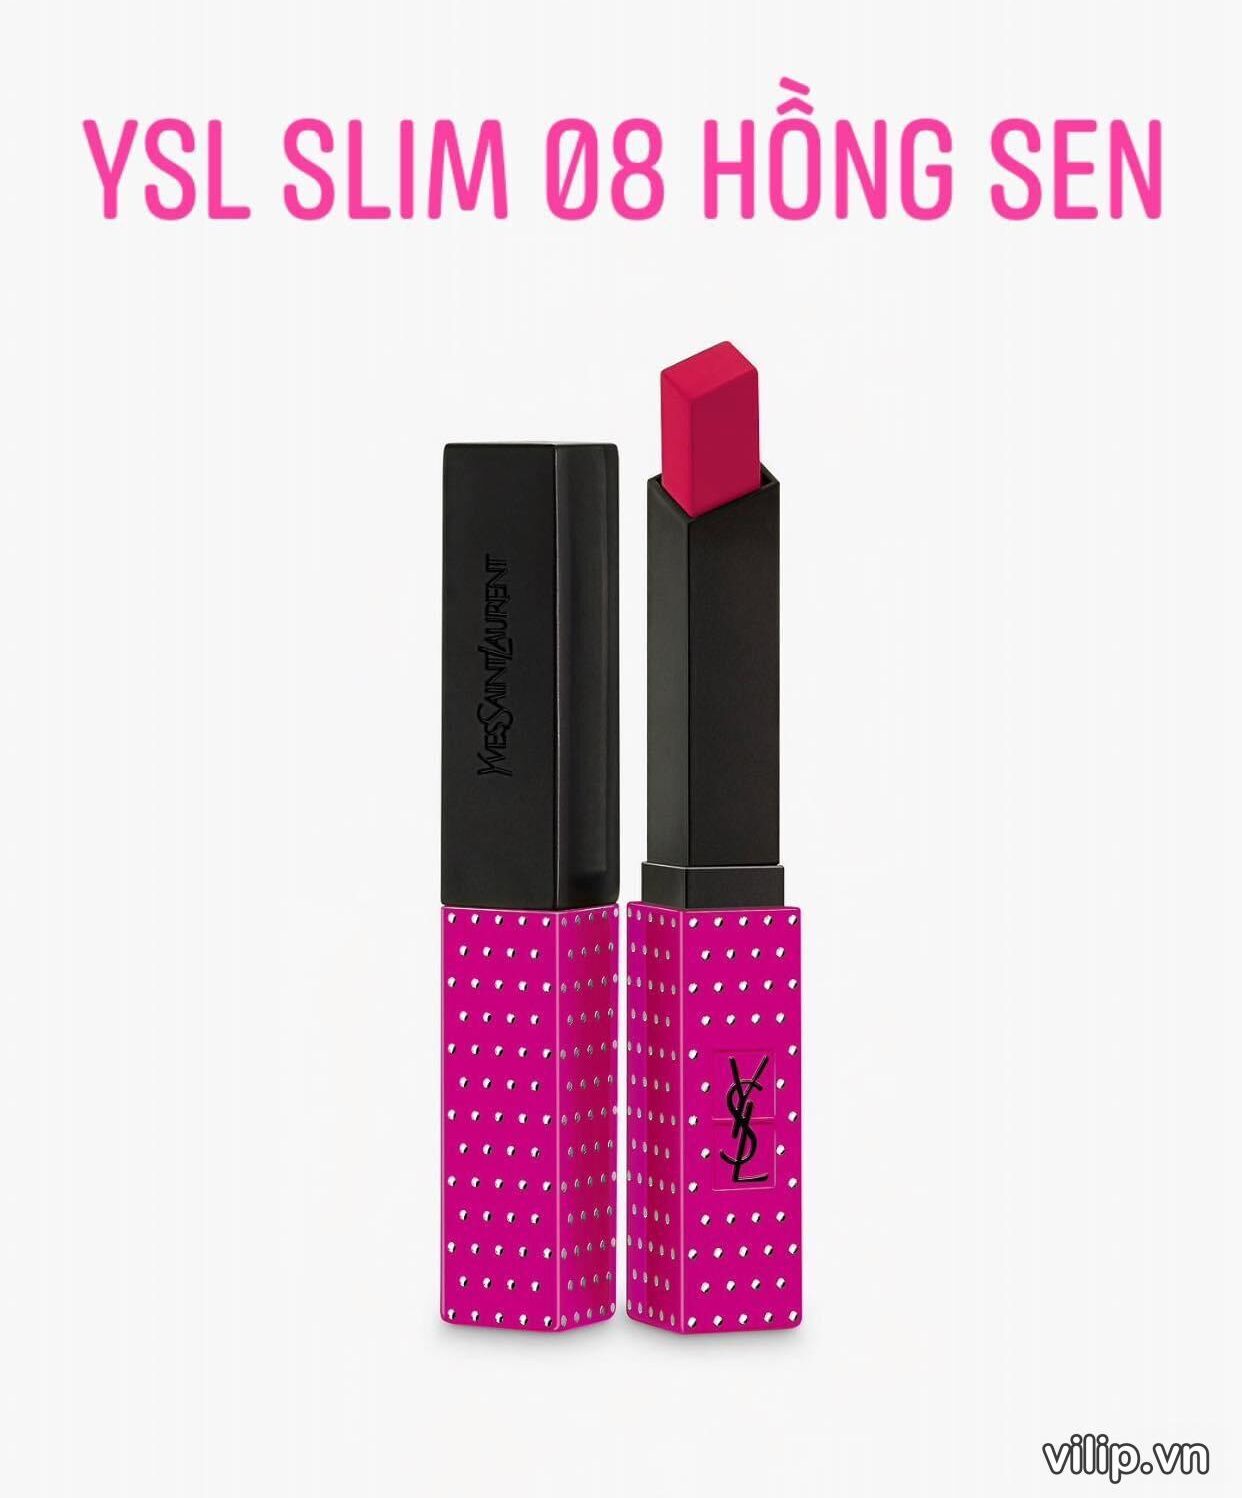 Son YSL The Slim 08 Contrary Fuchsia Limited Mau Hong Canh Sen 1 e1652785922723